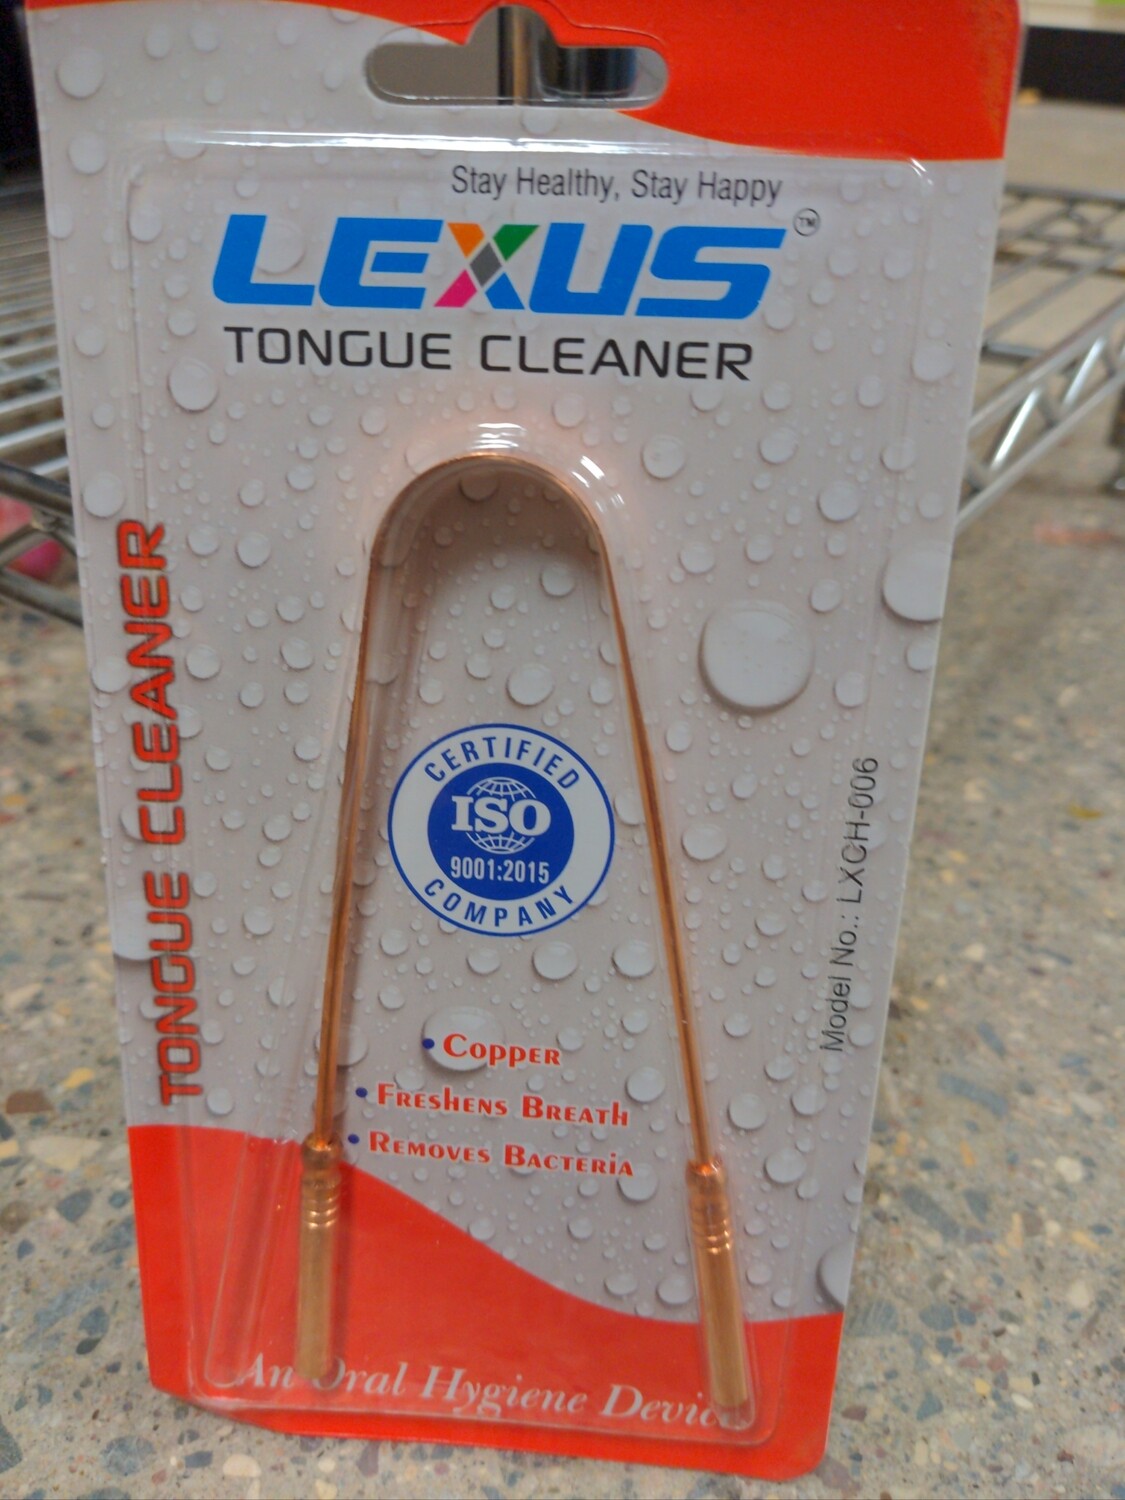 Lexus Tongue Cleaner(copper)